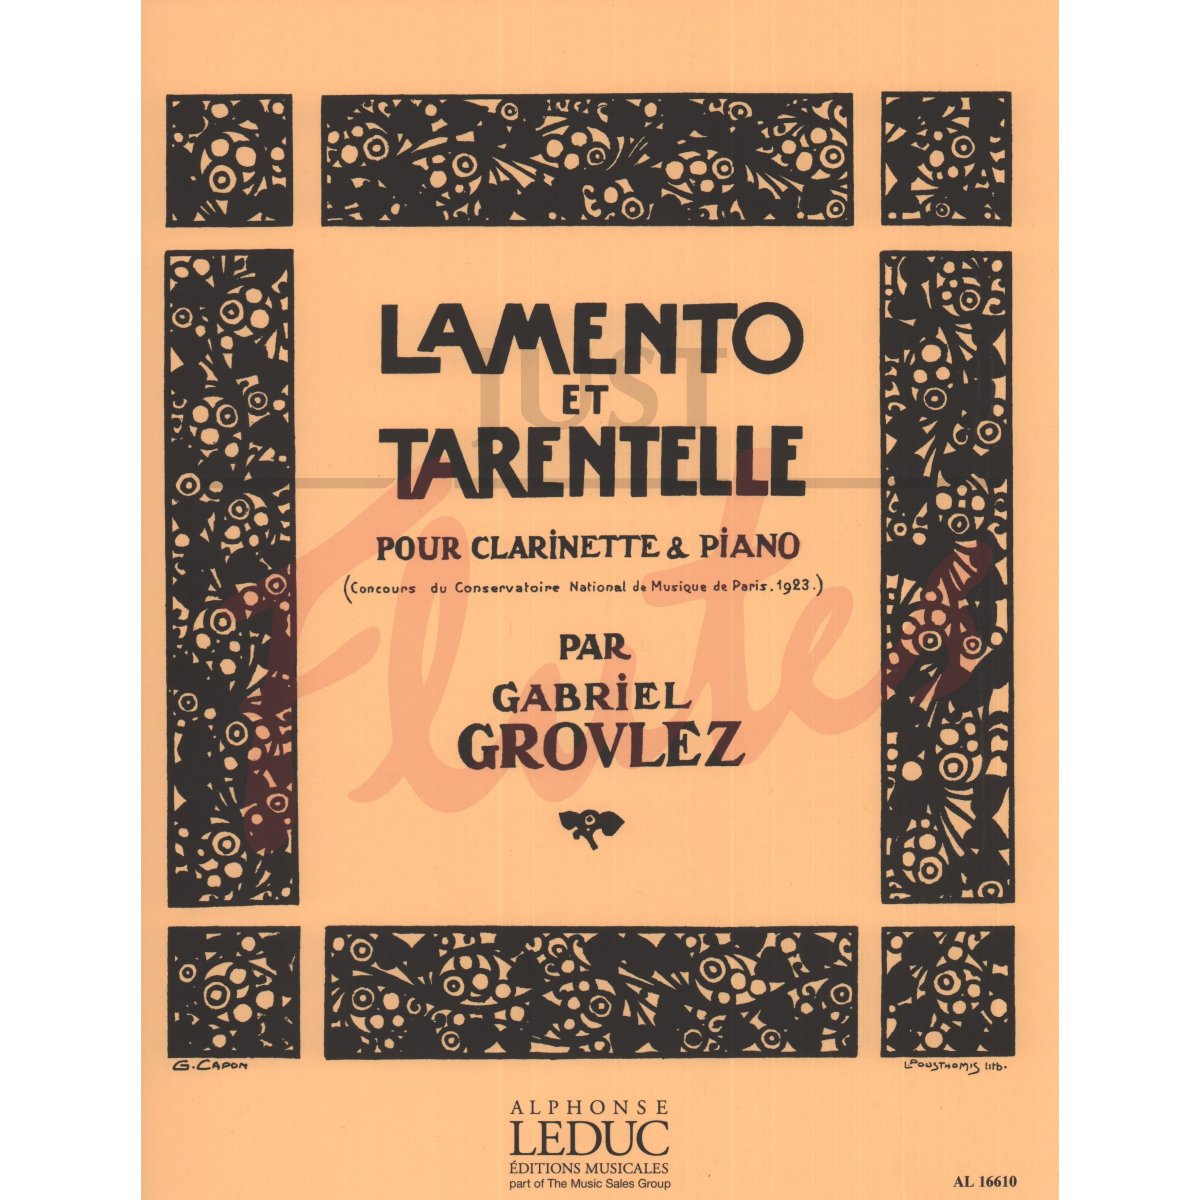 Lamento et Tarantelle for Clarinet and Piano